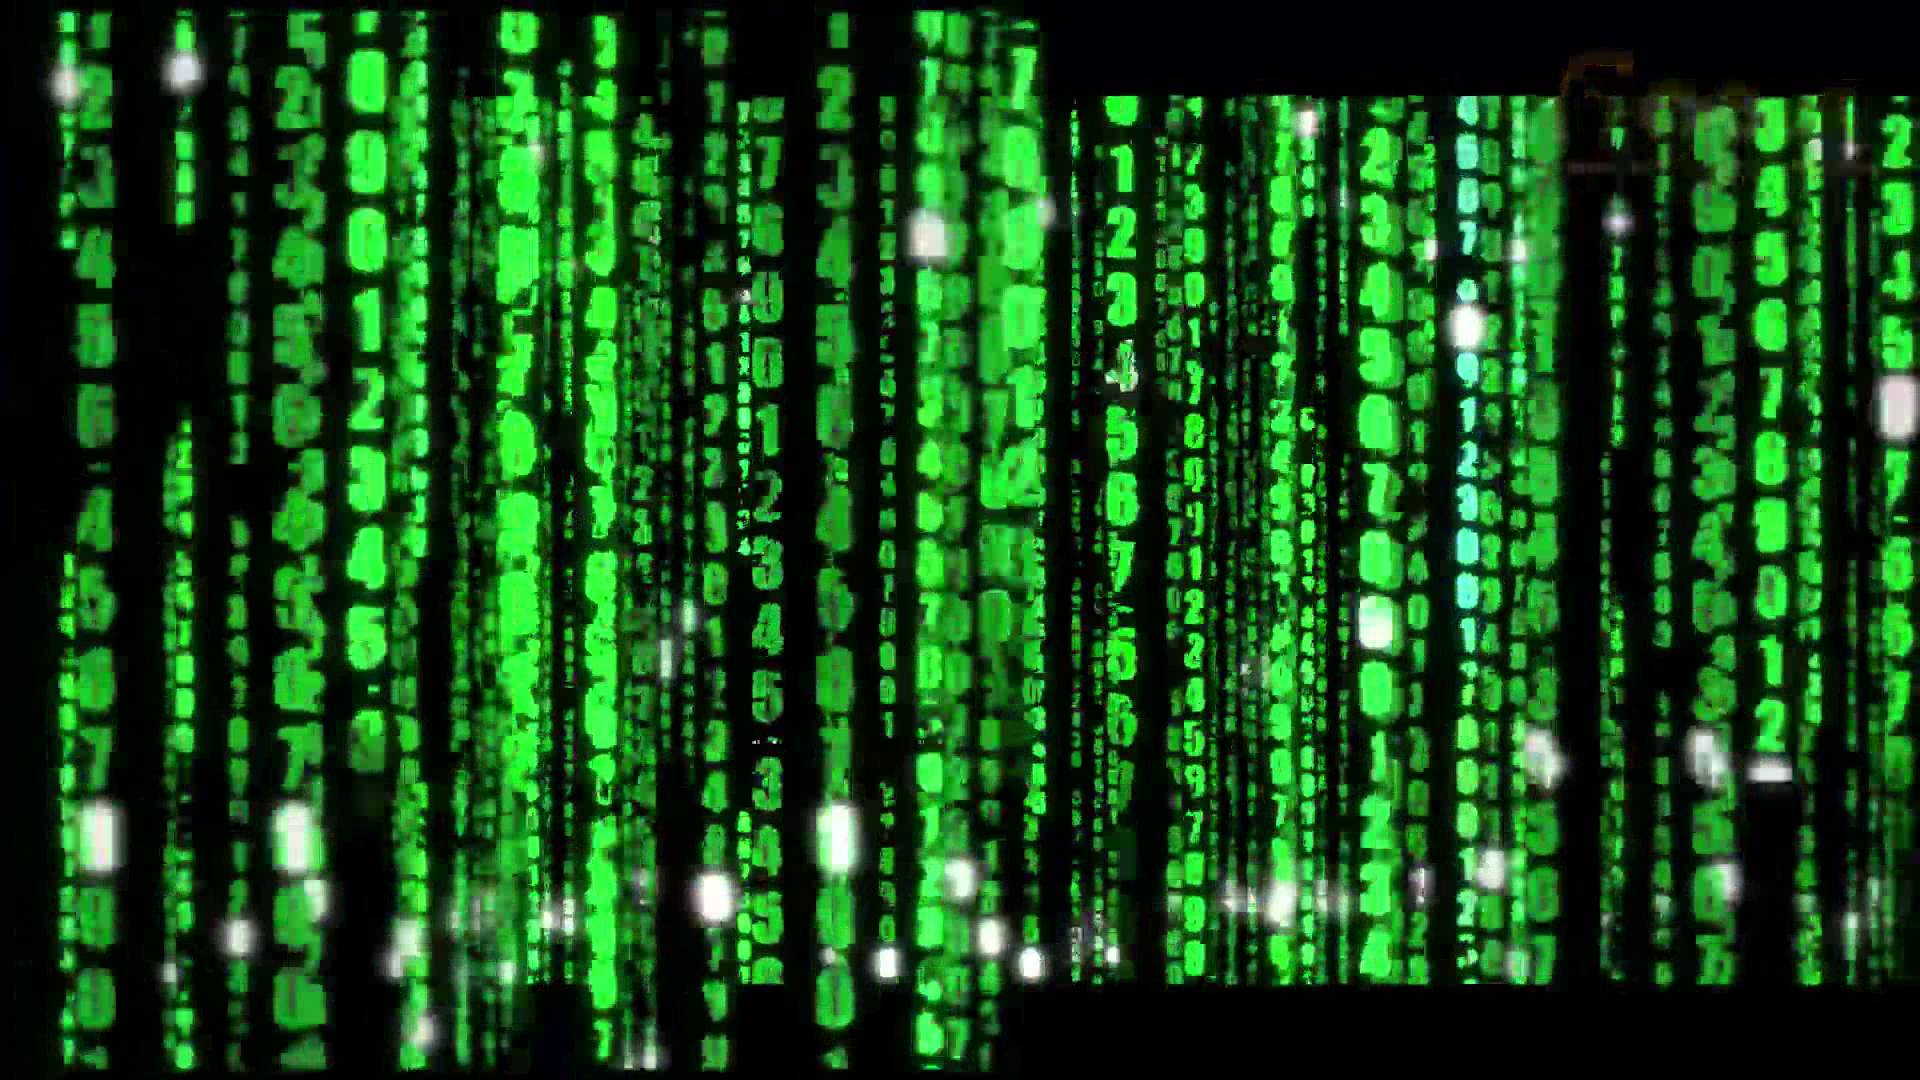 Fondos de pantalla de Matrix # 89DSH15, 233.24 Kb - 4USkY